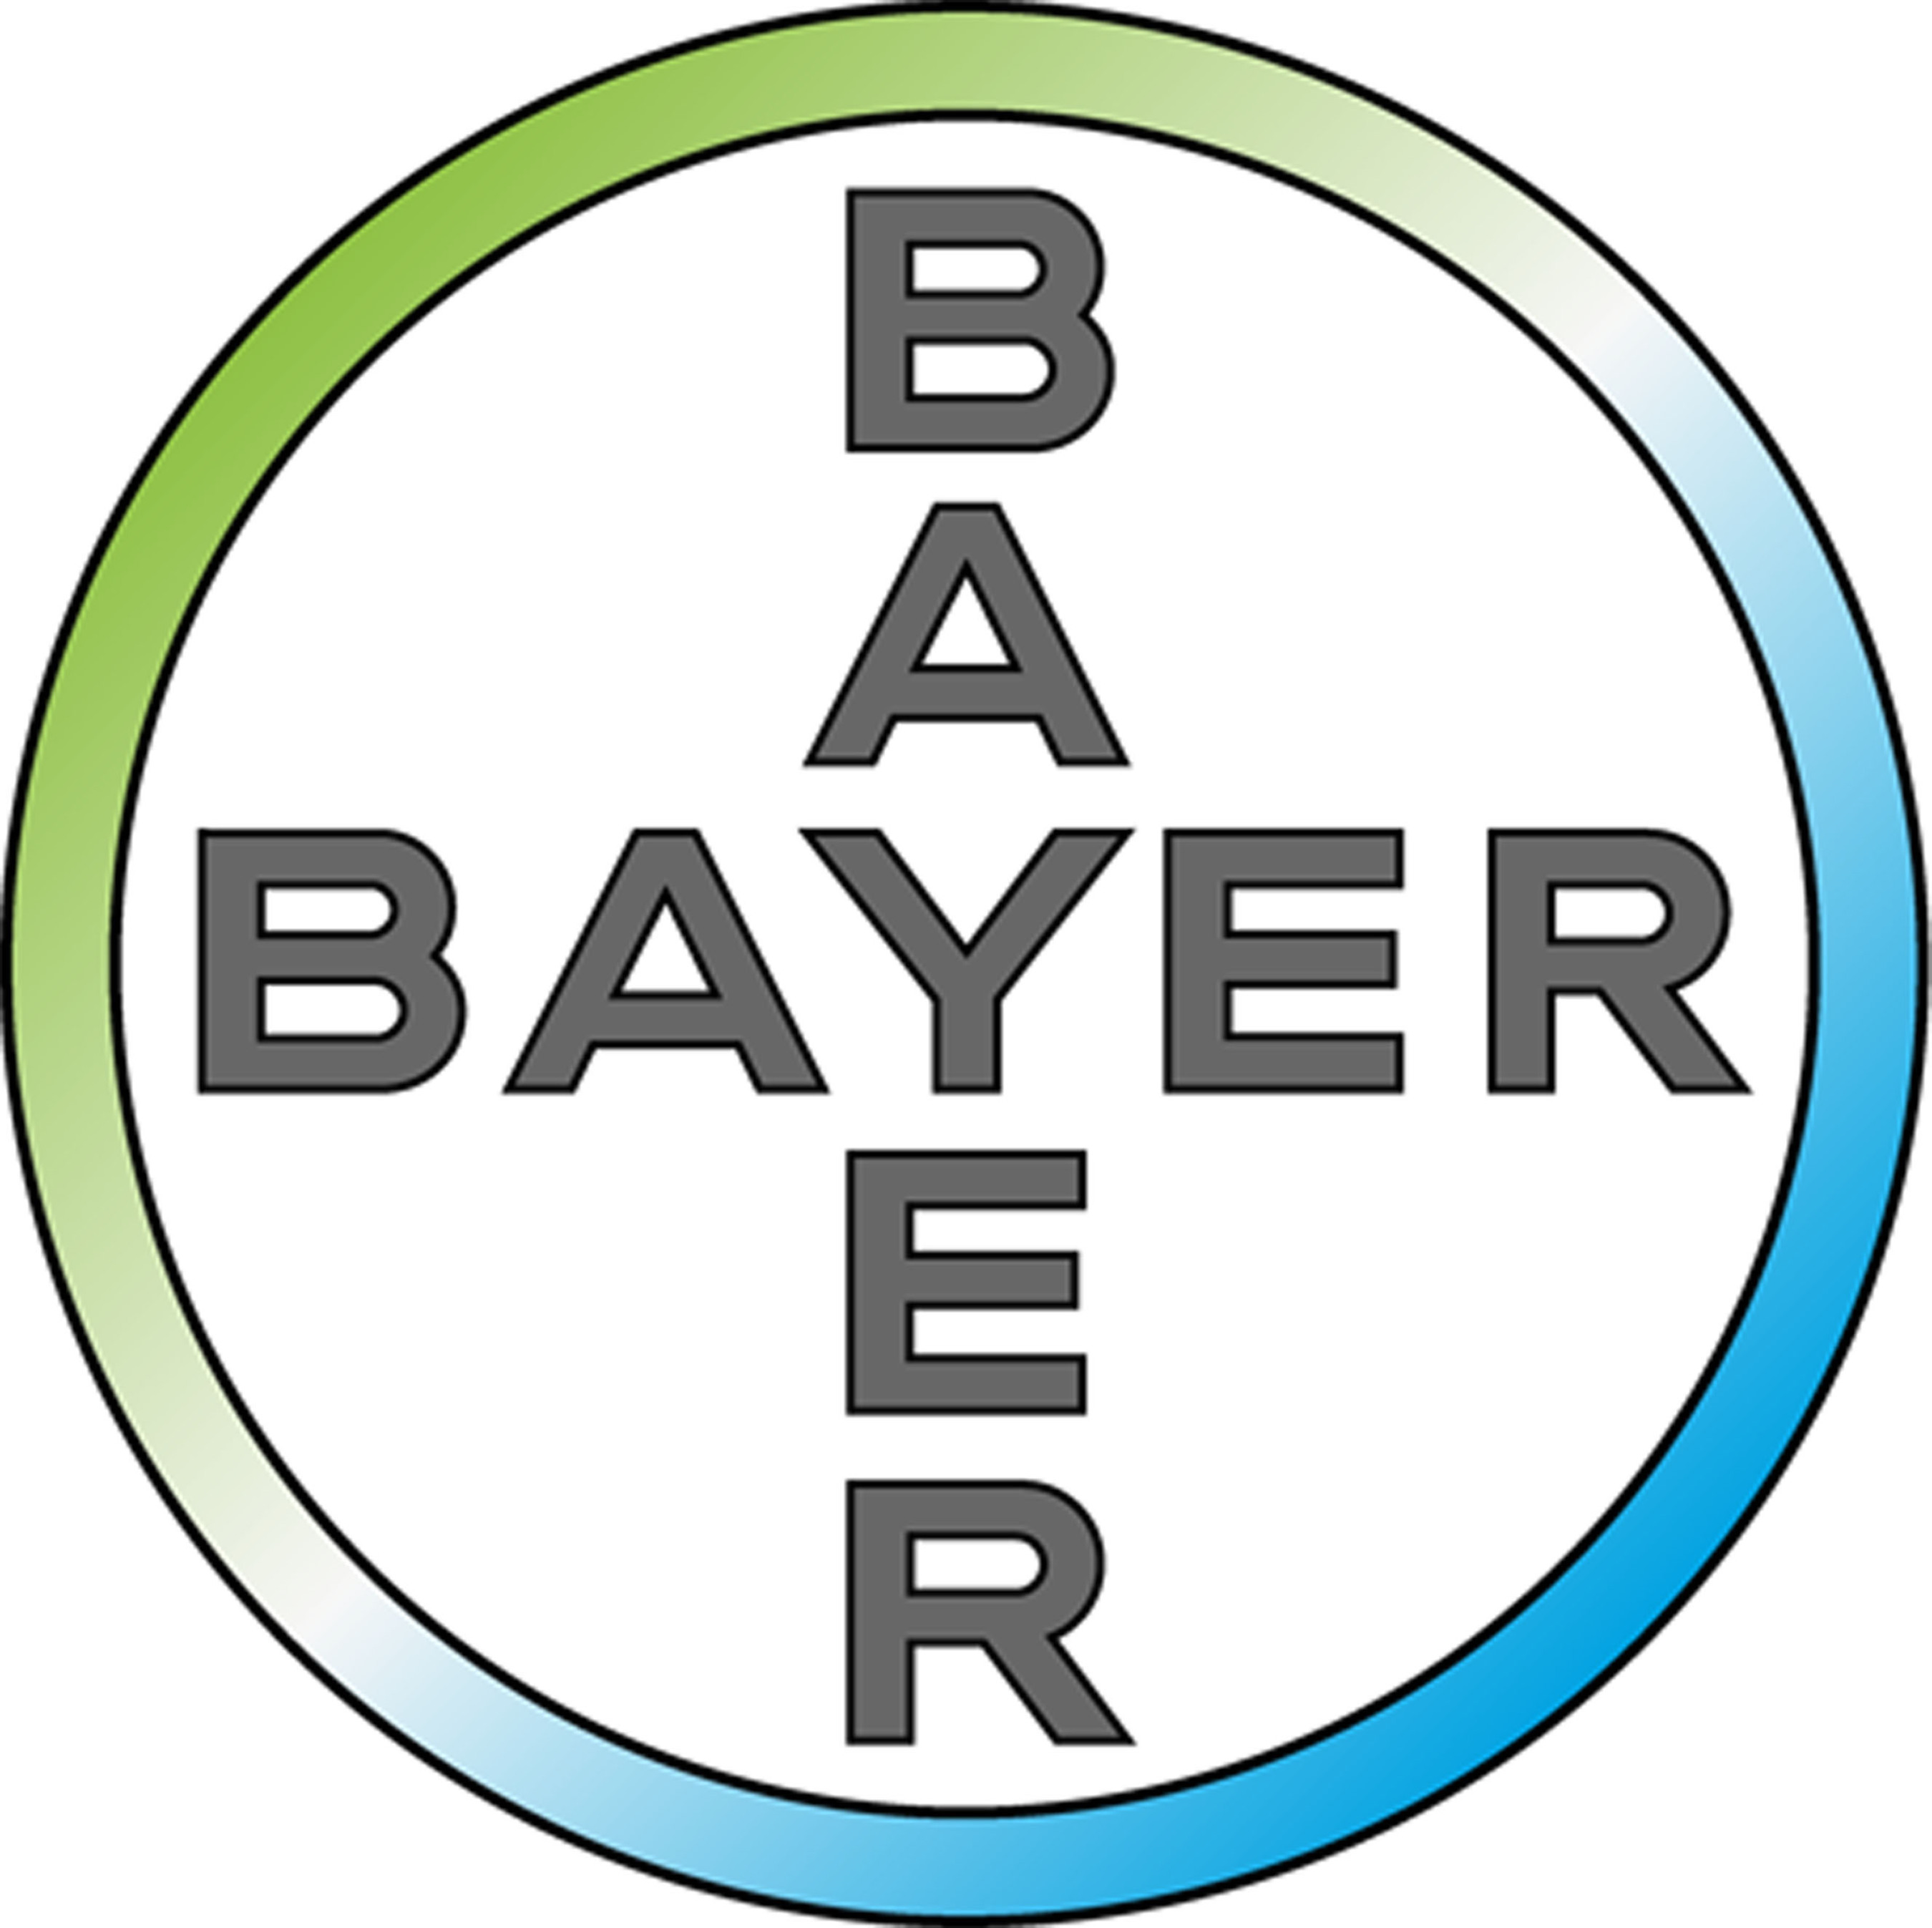 Bayer Cross. (PRNewsFoto/Bayer Healthcare) (PRNewsFoto/BAYER HEALTHCARE)